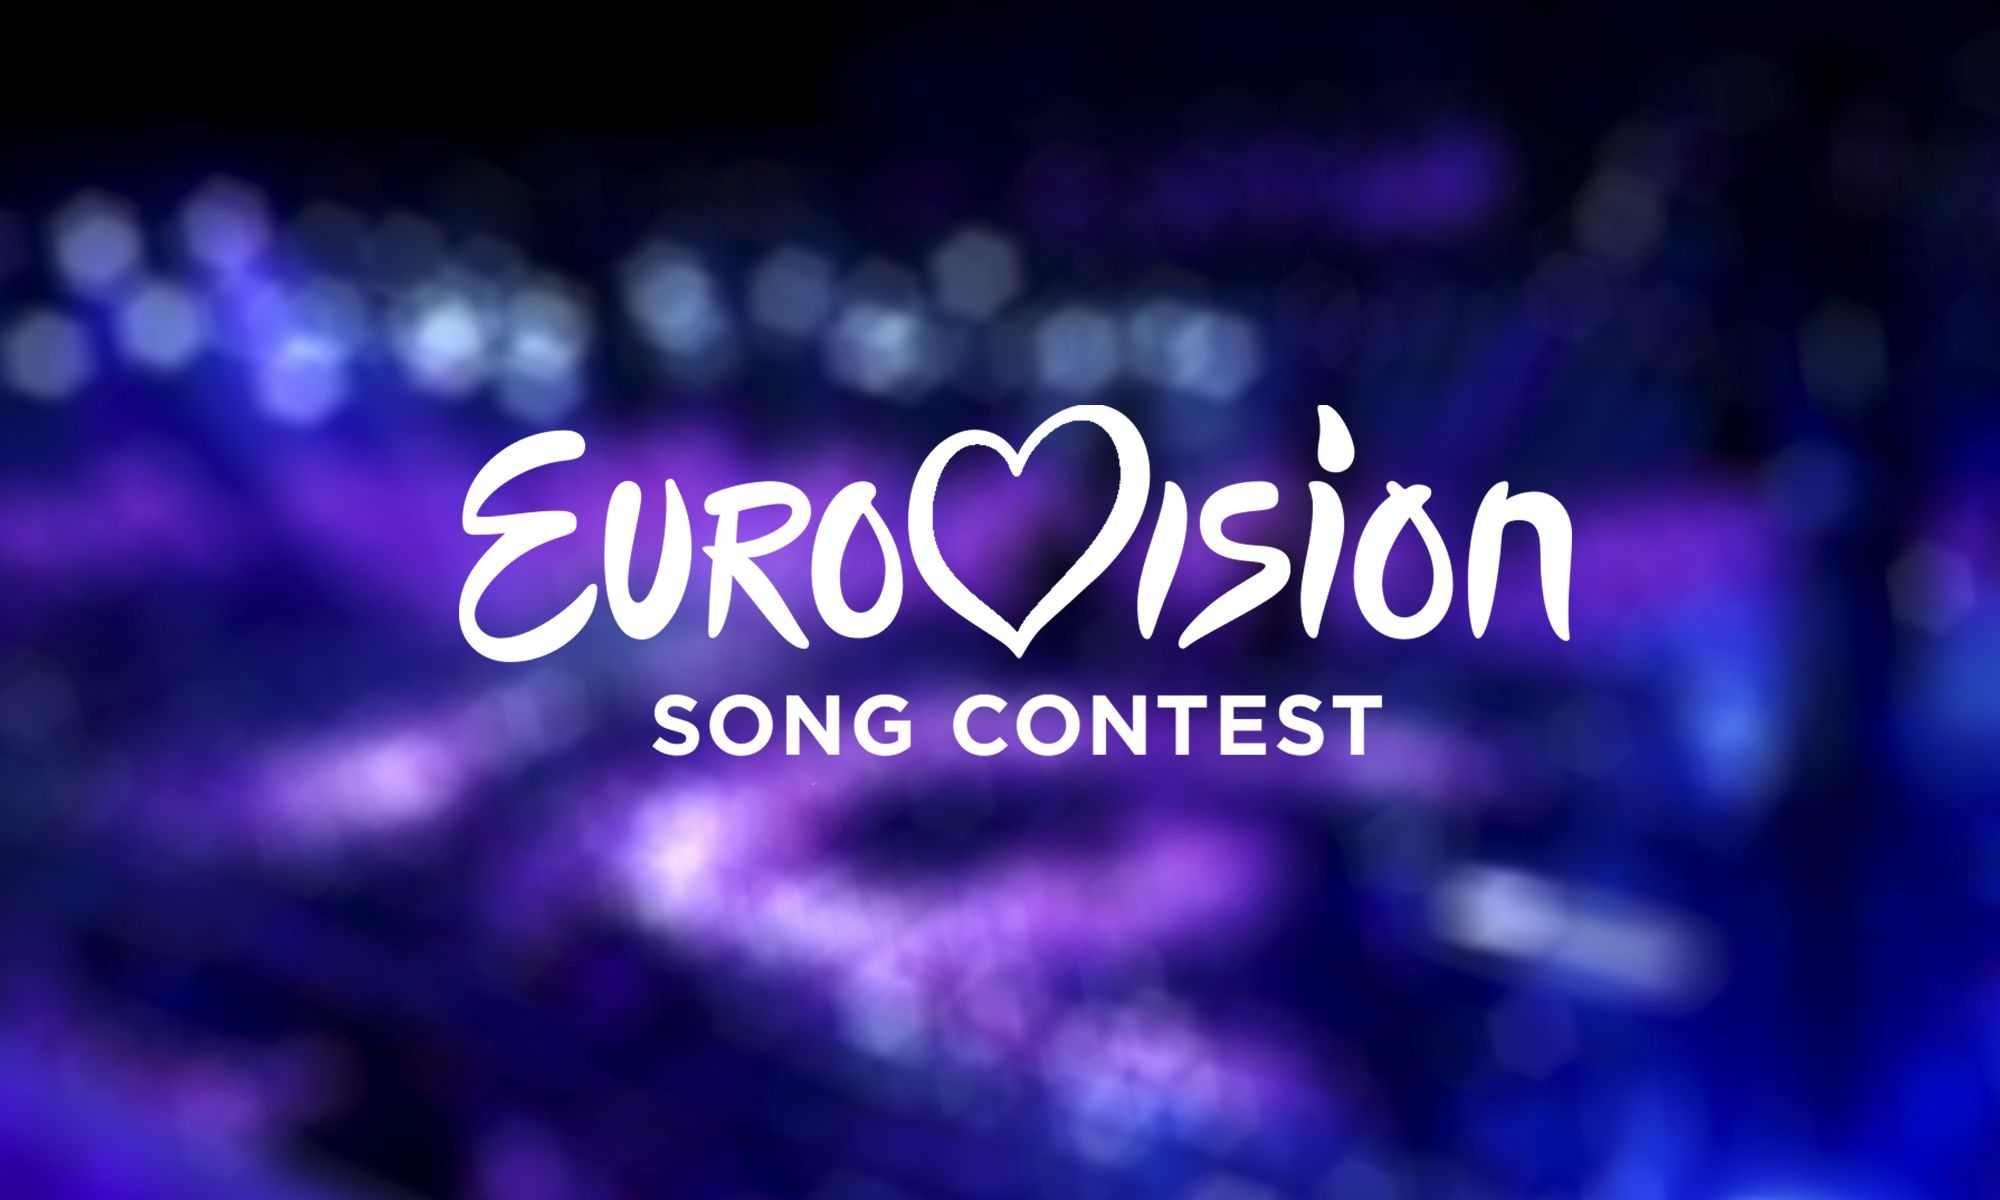 sin_ano_30122014_114417_logo_eurovision_grande-1